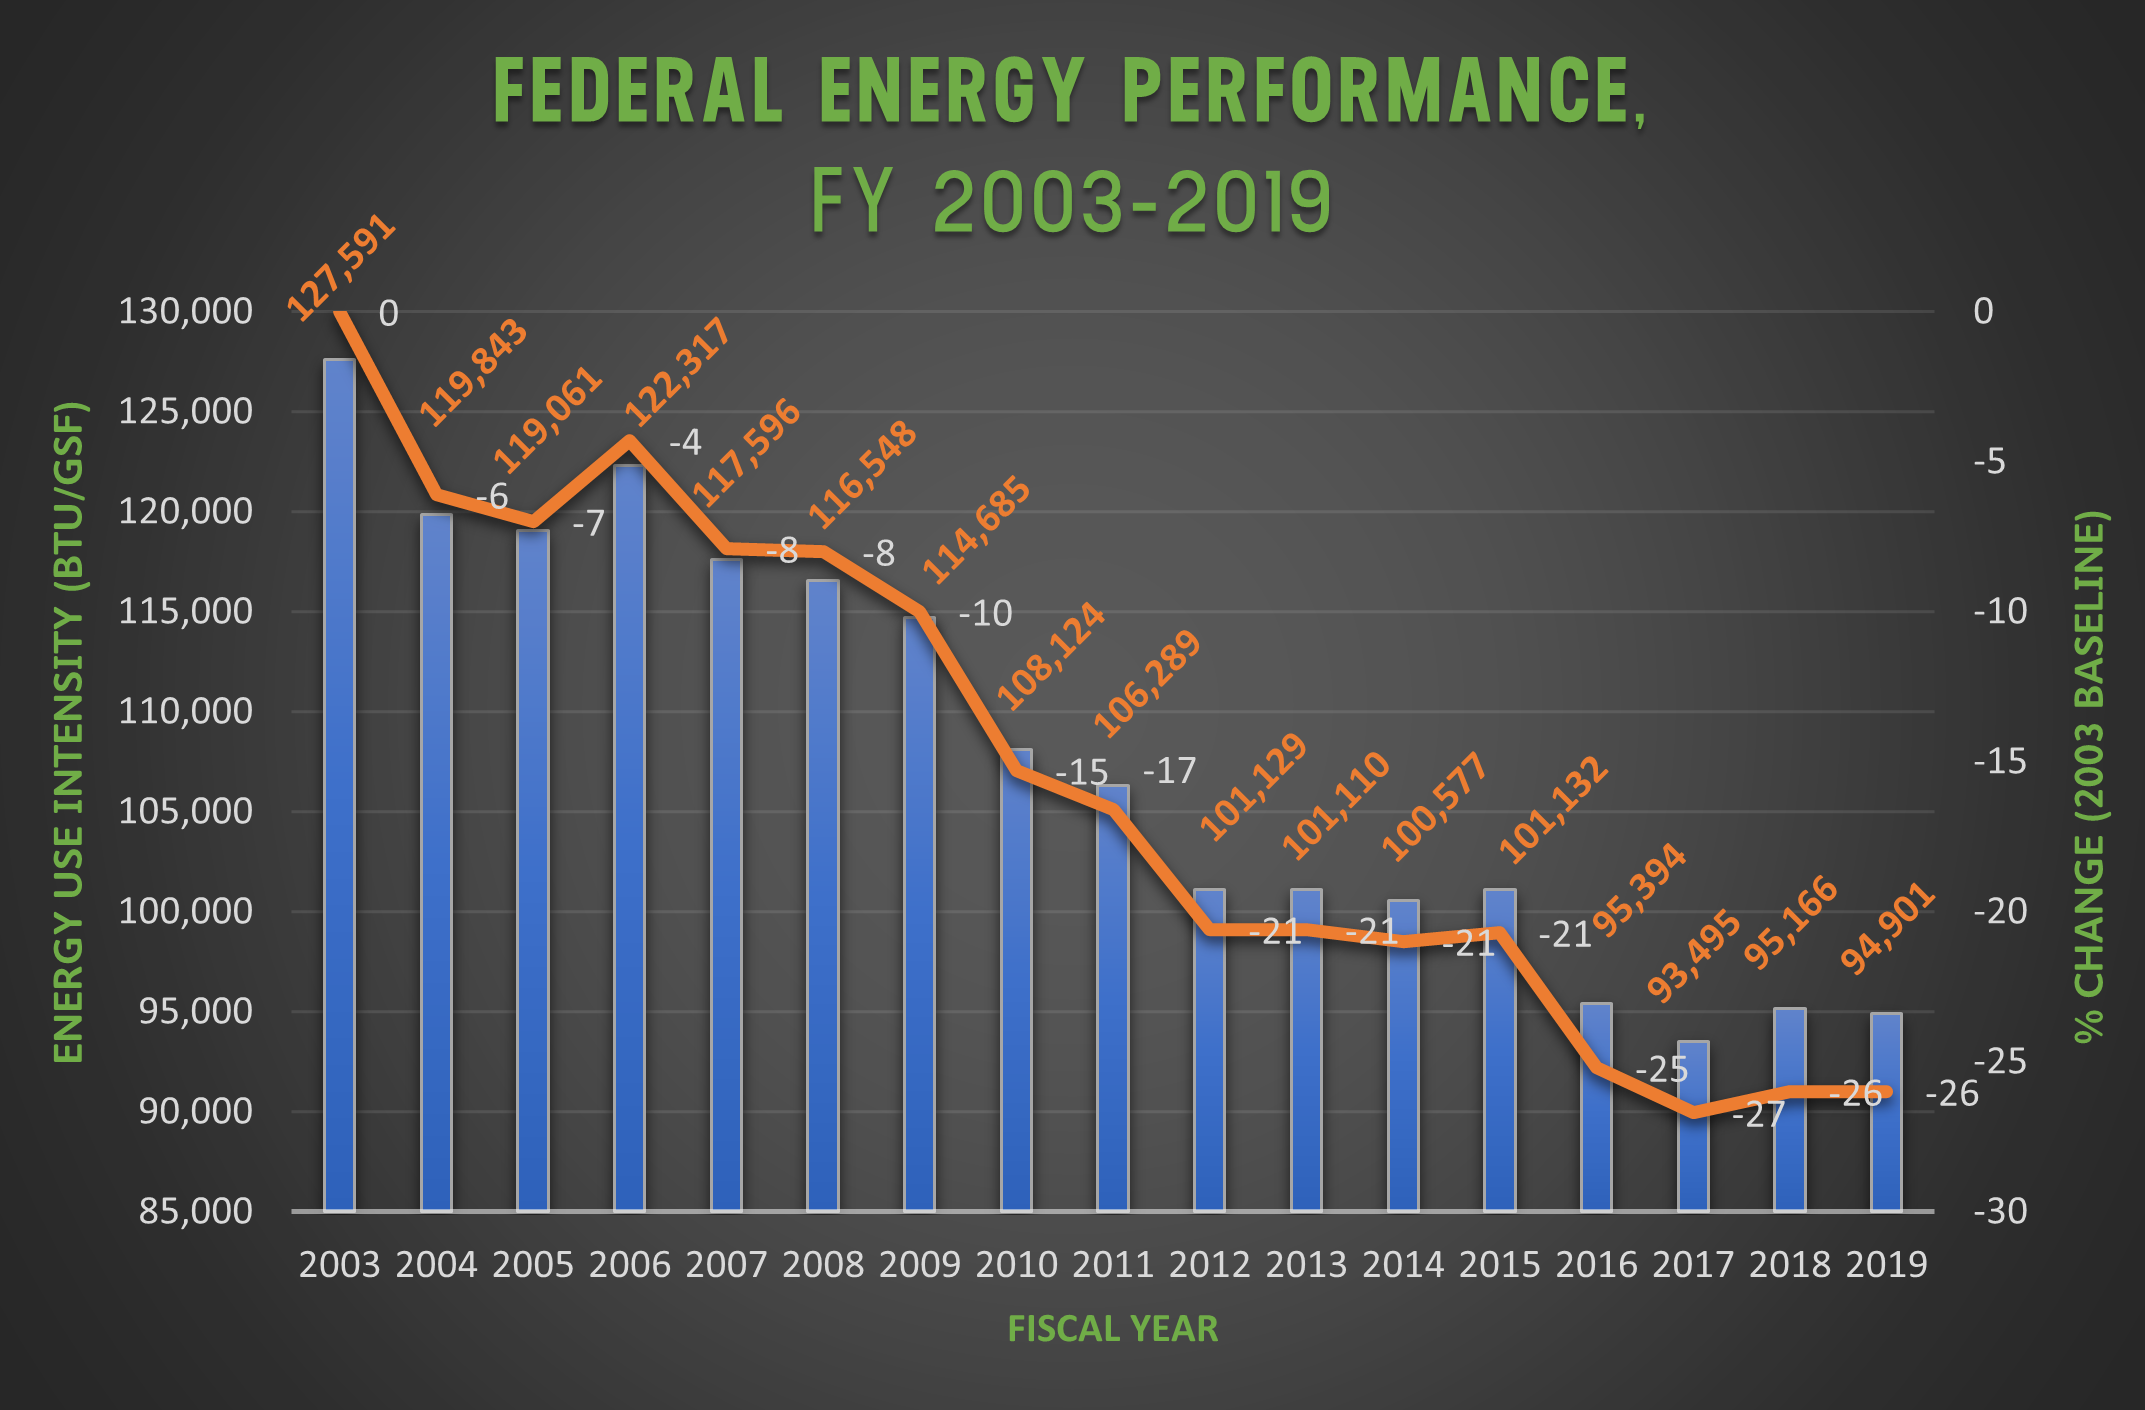 Federal Energy Performance chart. 